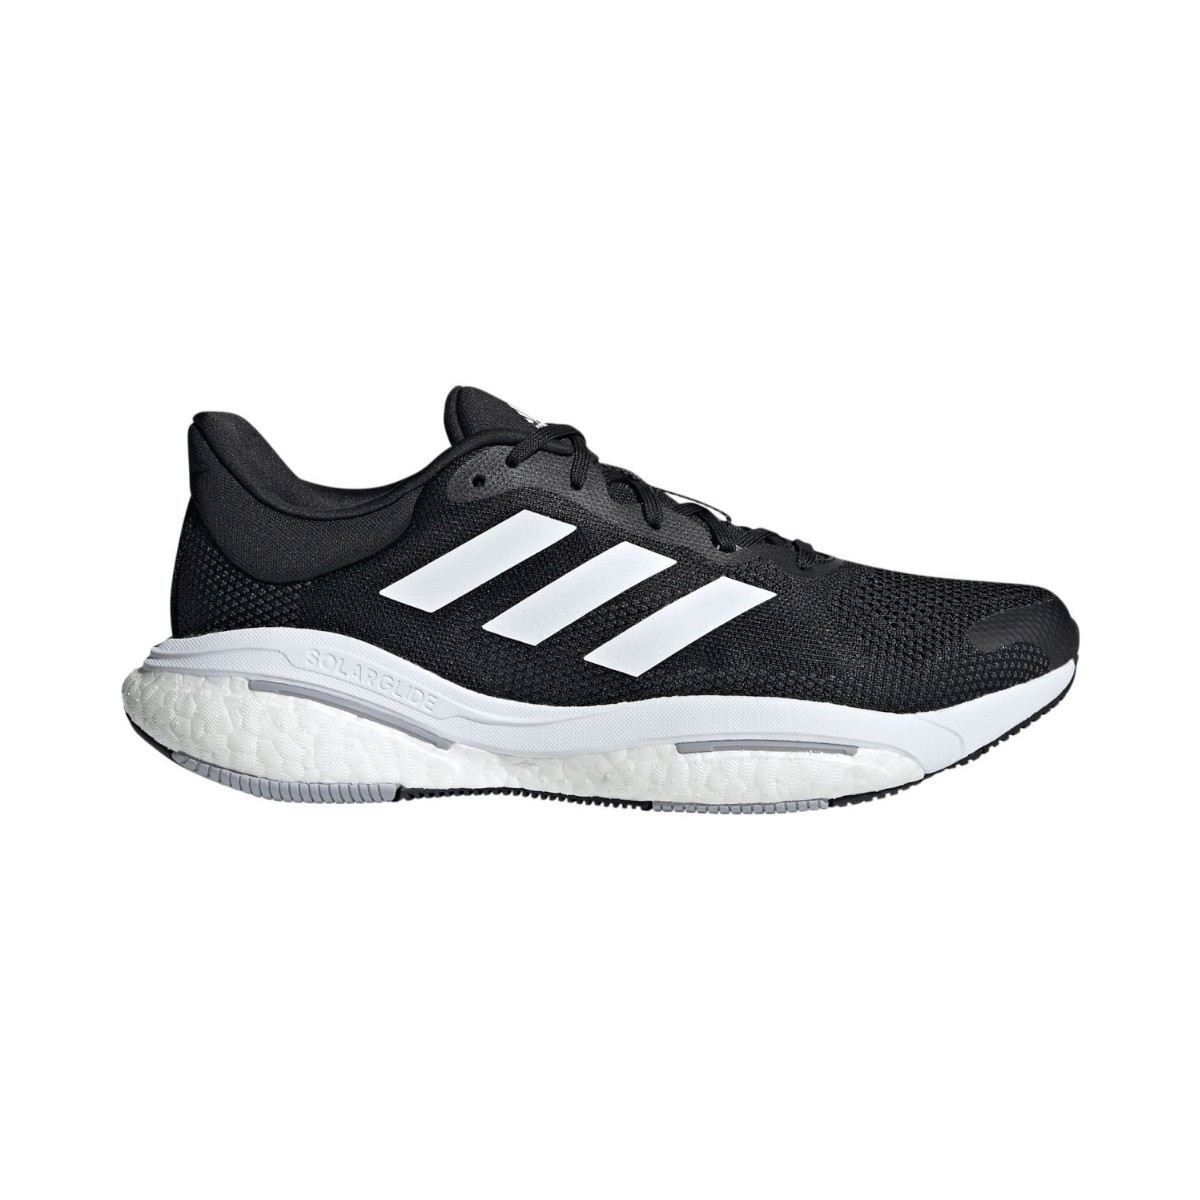 Shoes Adidas Solar Glide 5 Black AW22, Size UK 8